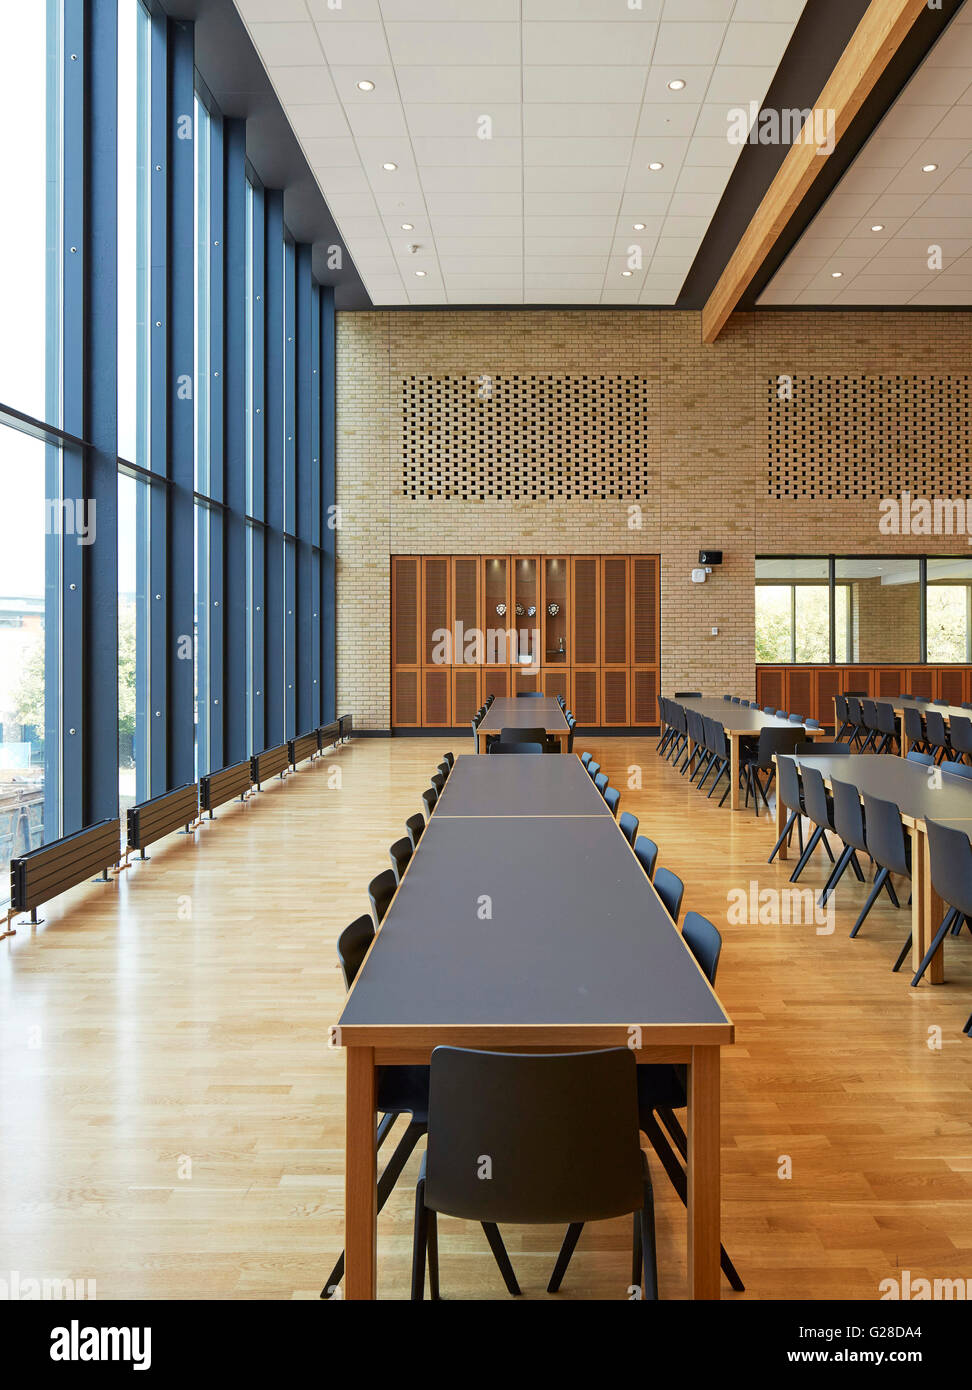 Empty dining hall. The Barn, Sutton Bonington Campus, Nottingham, United Kingdom. Architect: Make Ltd, 2015. Stock Photo